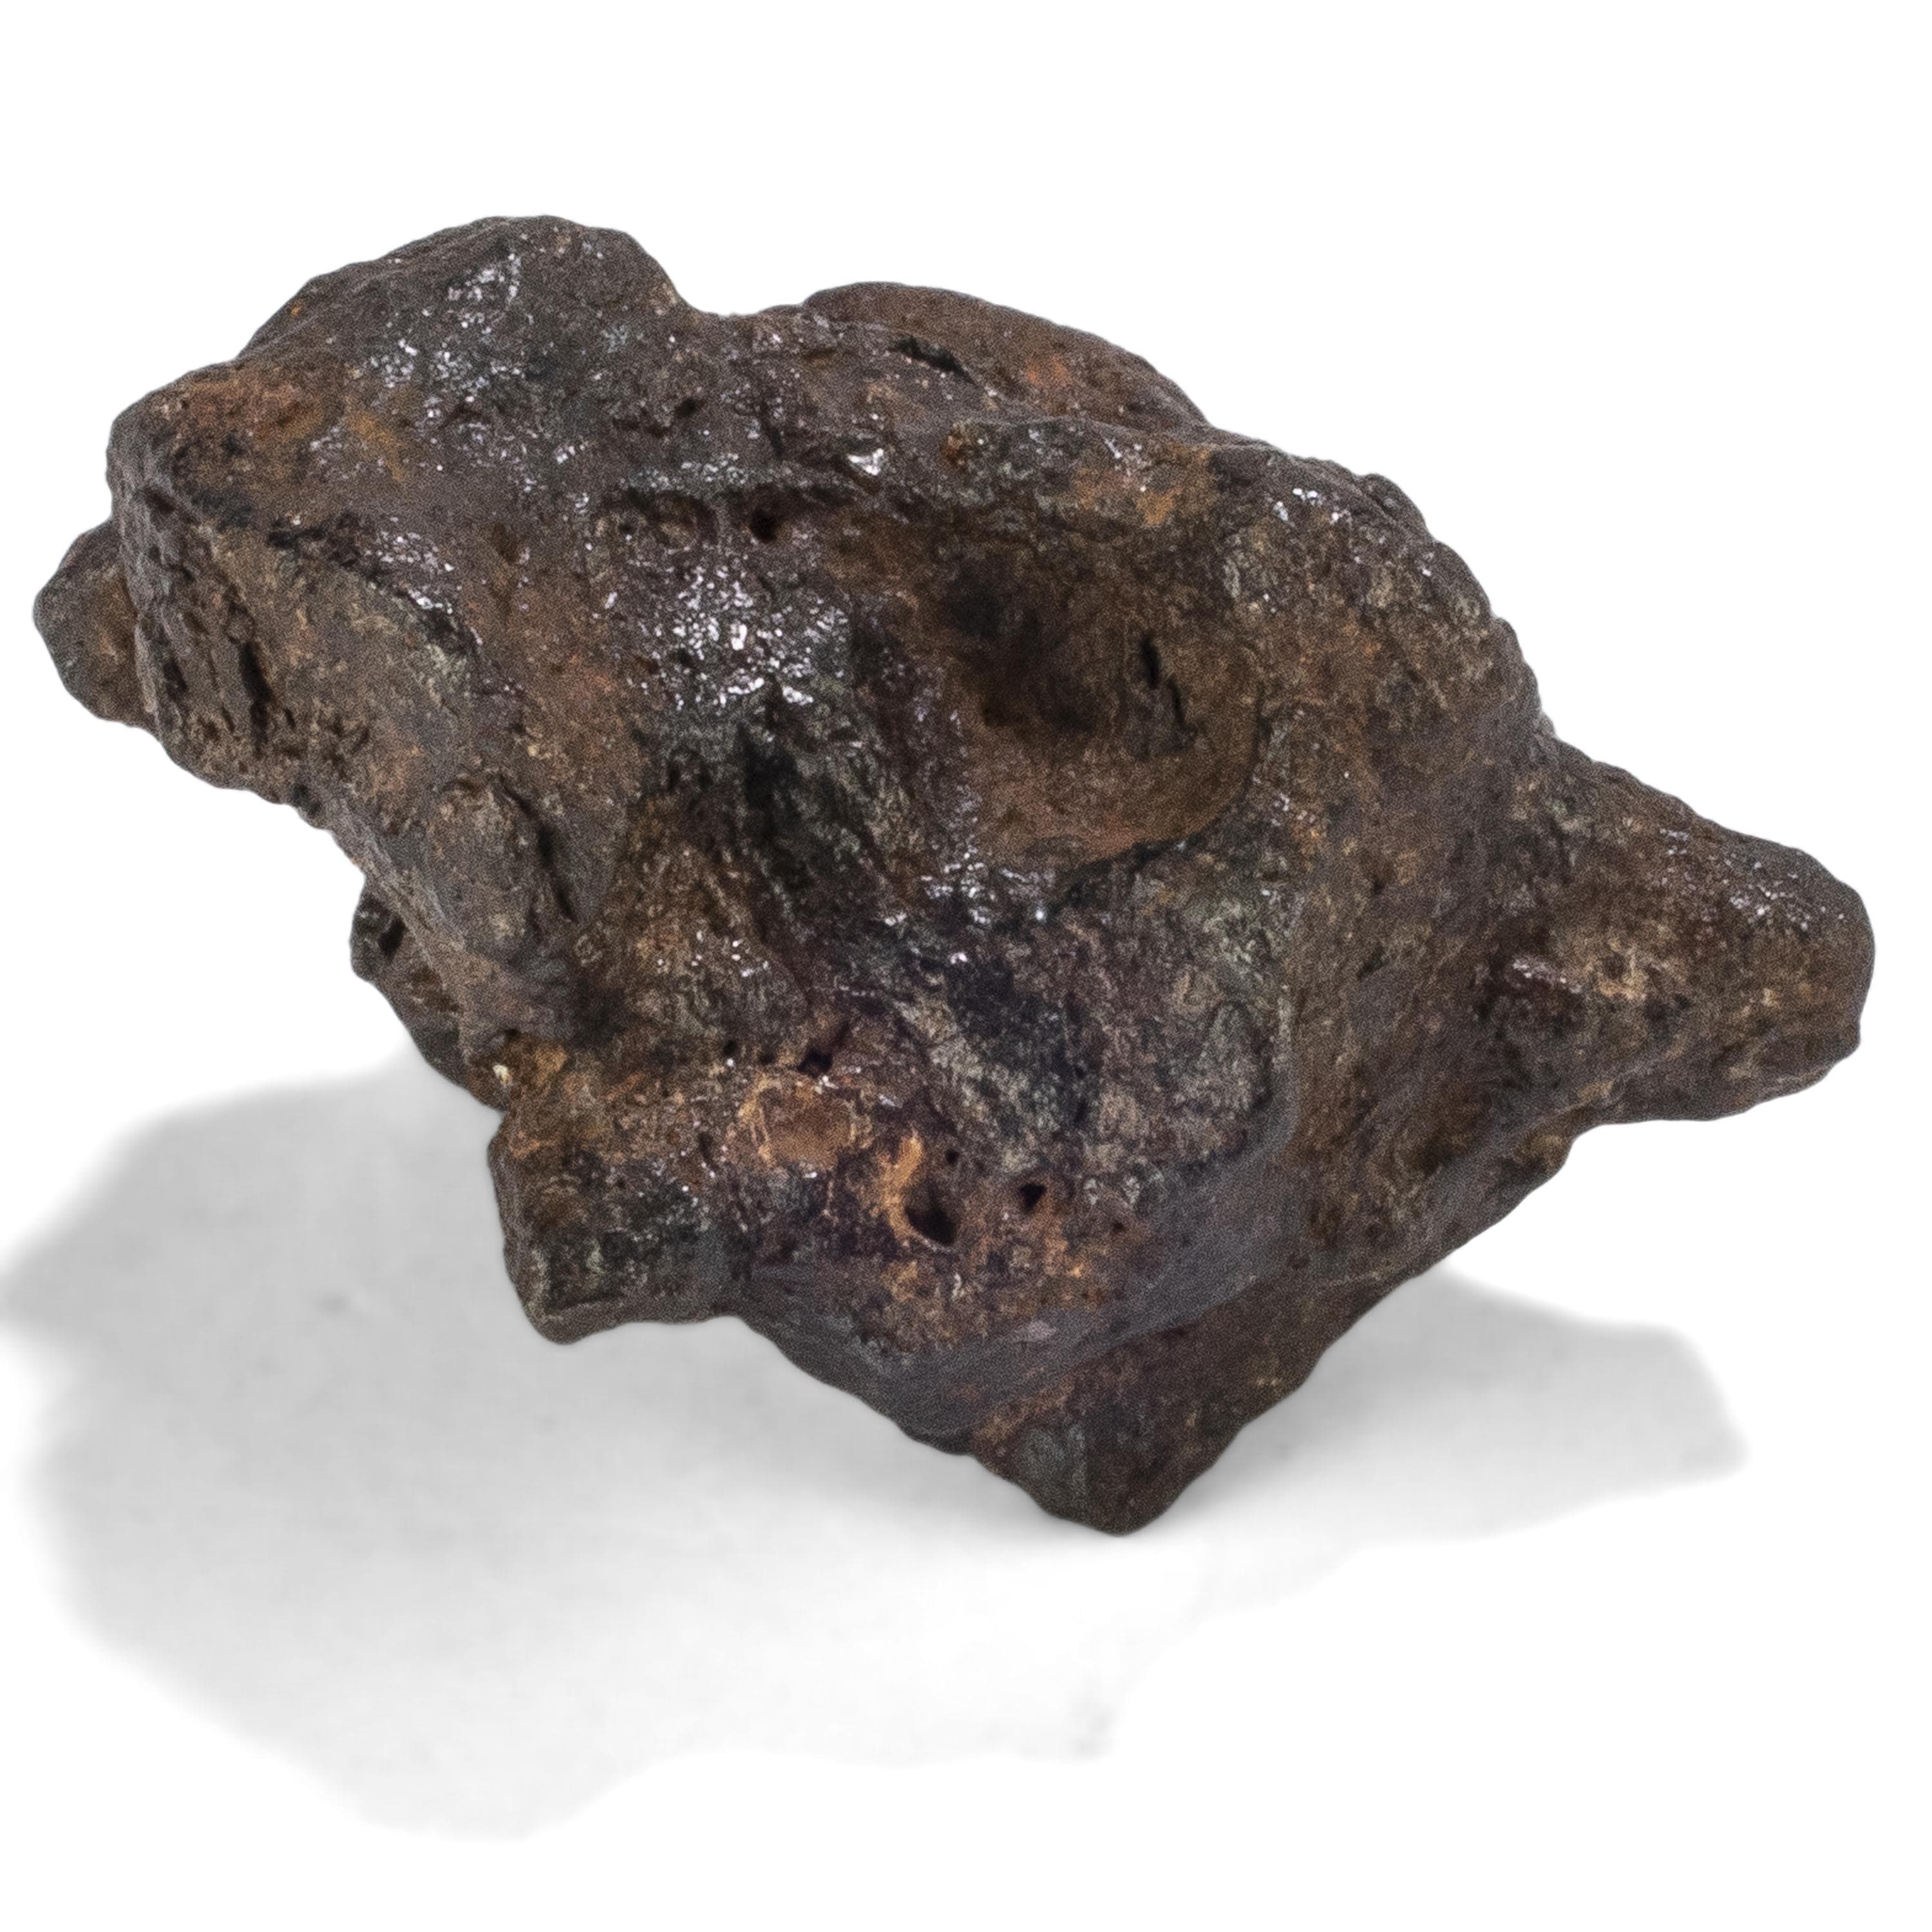 Kalifano Meteorites Sericho Iron Meteorite discovered in Kenya - 20 grams MTCHO400